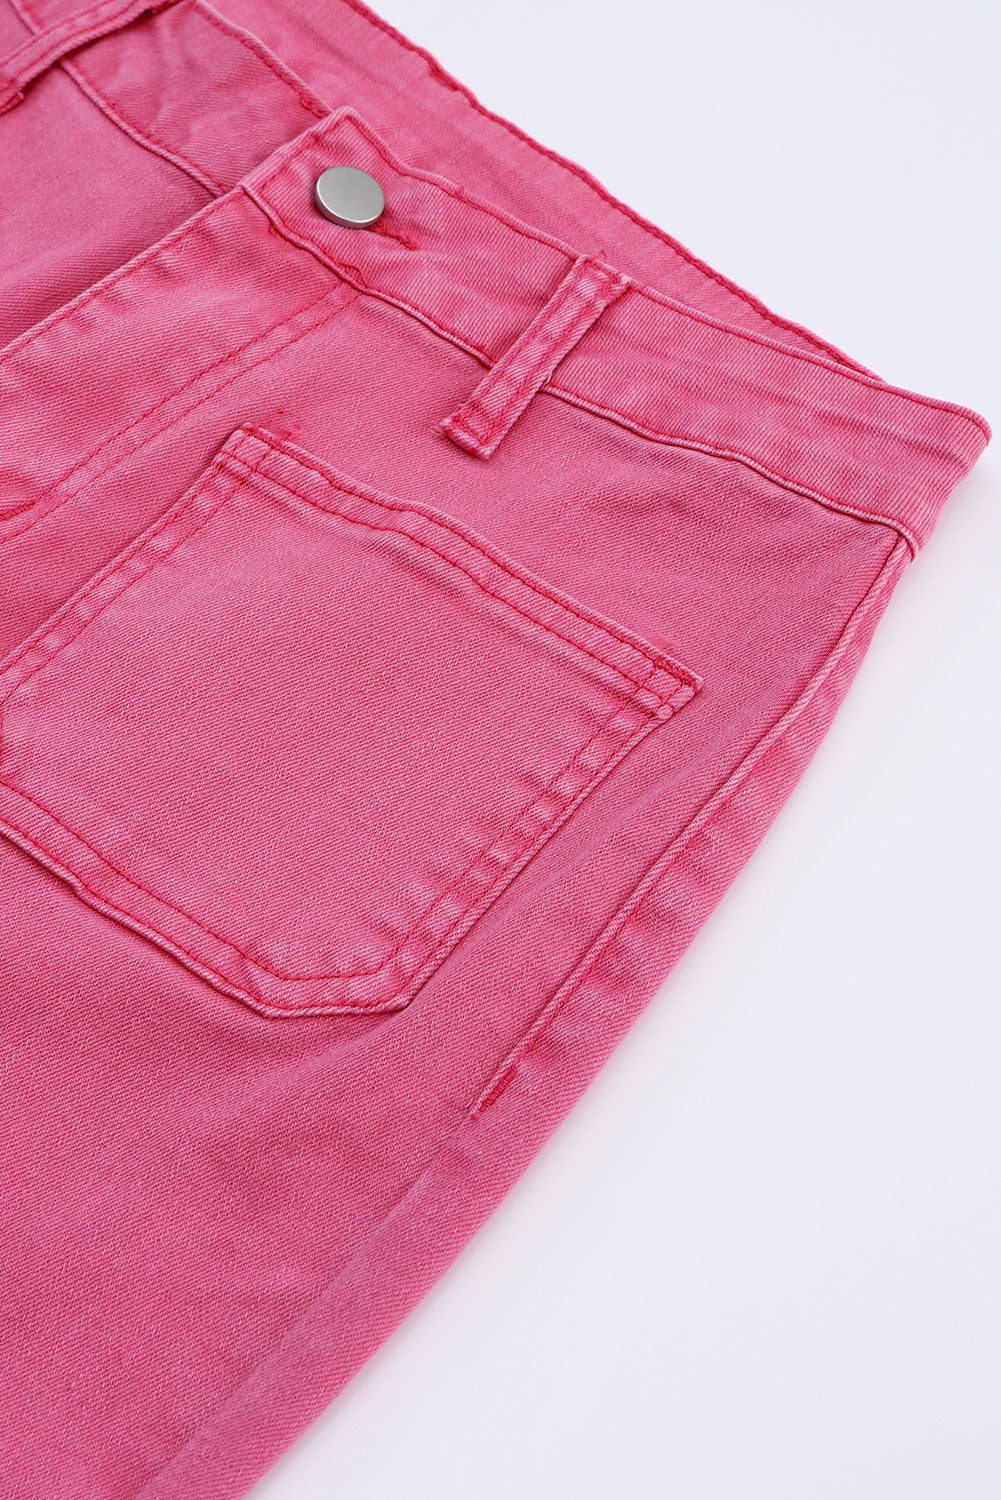 Women's Pink Raw Hem Light Wash Flare Mid Rise Pants